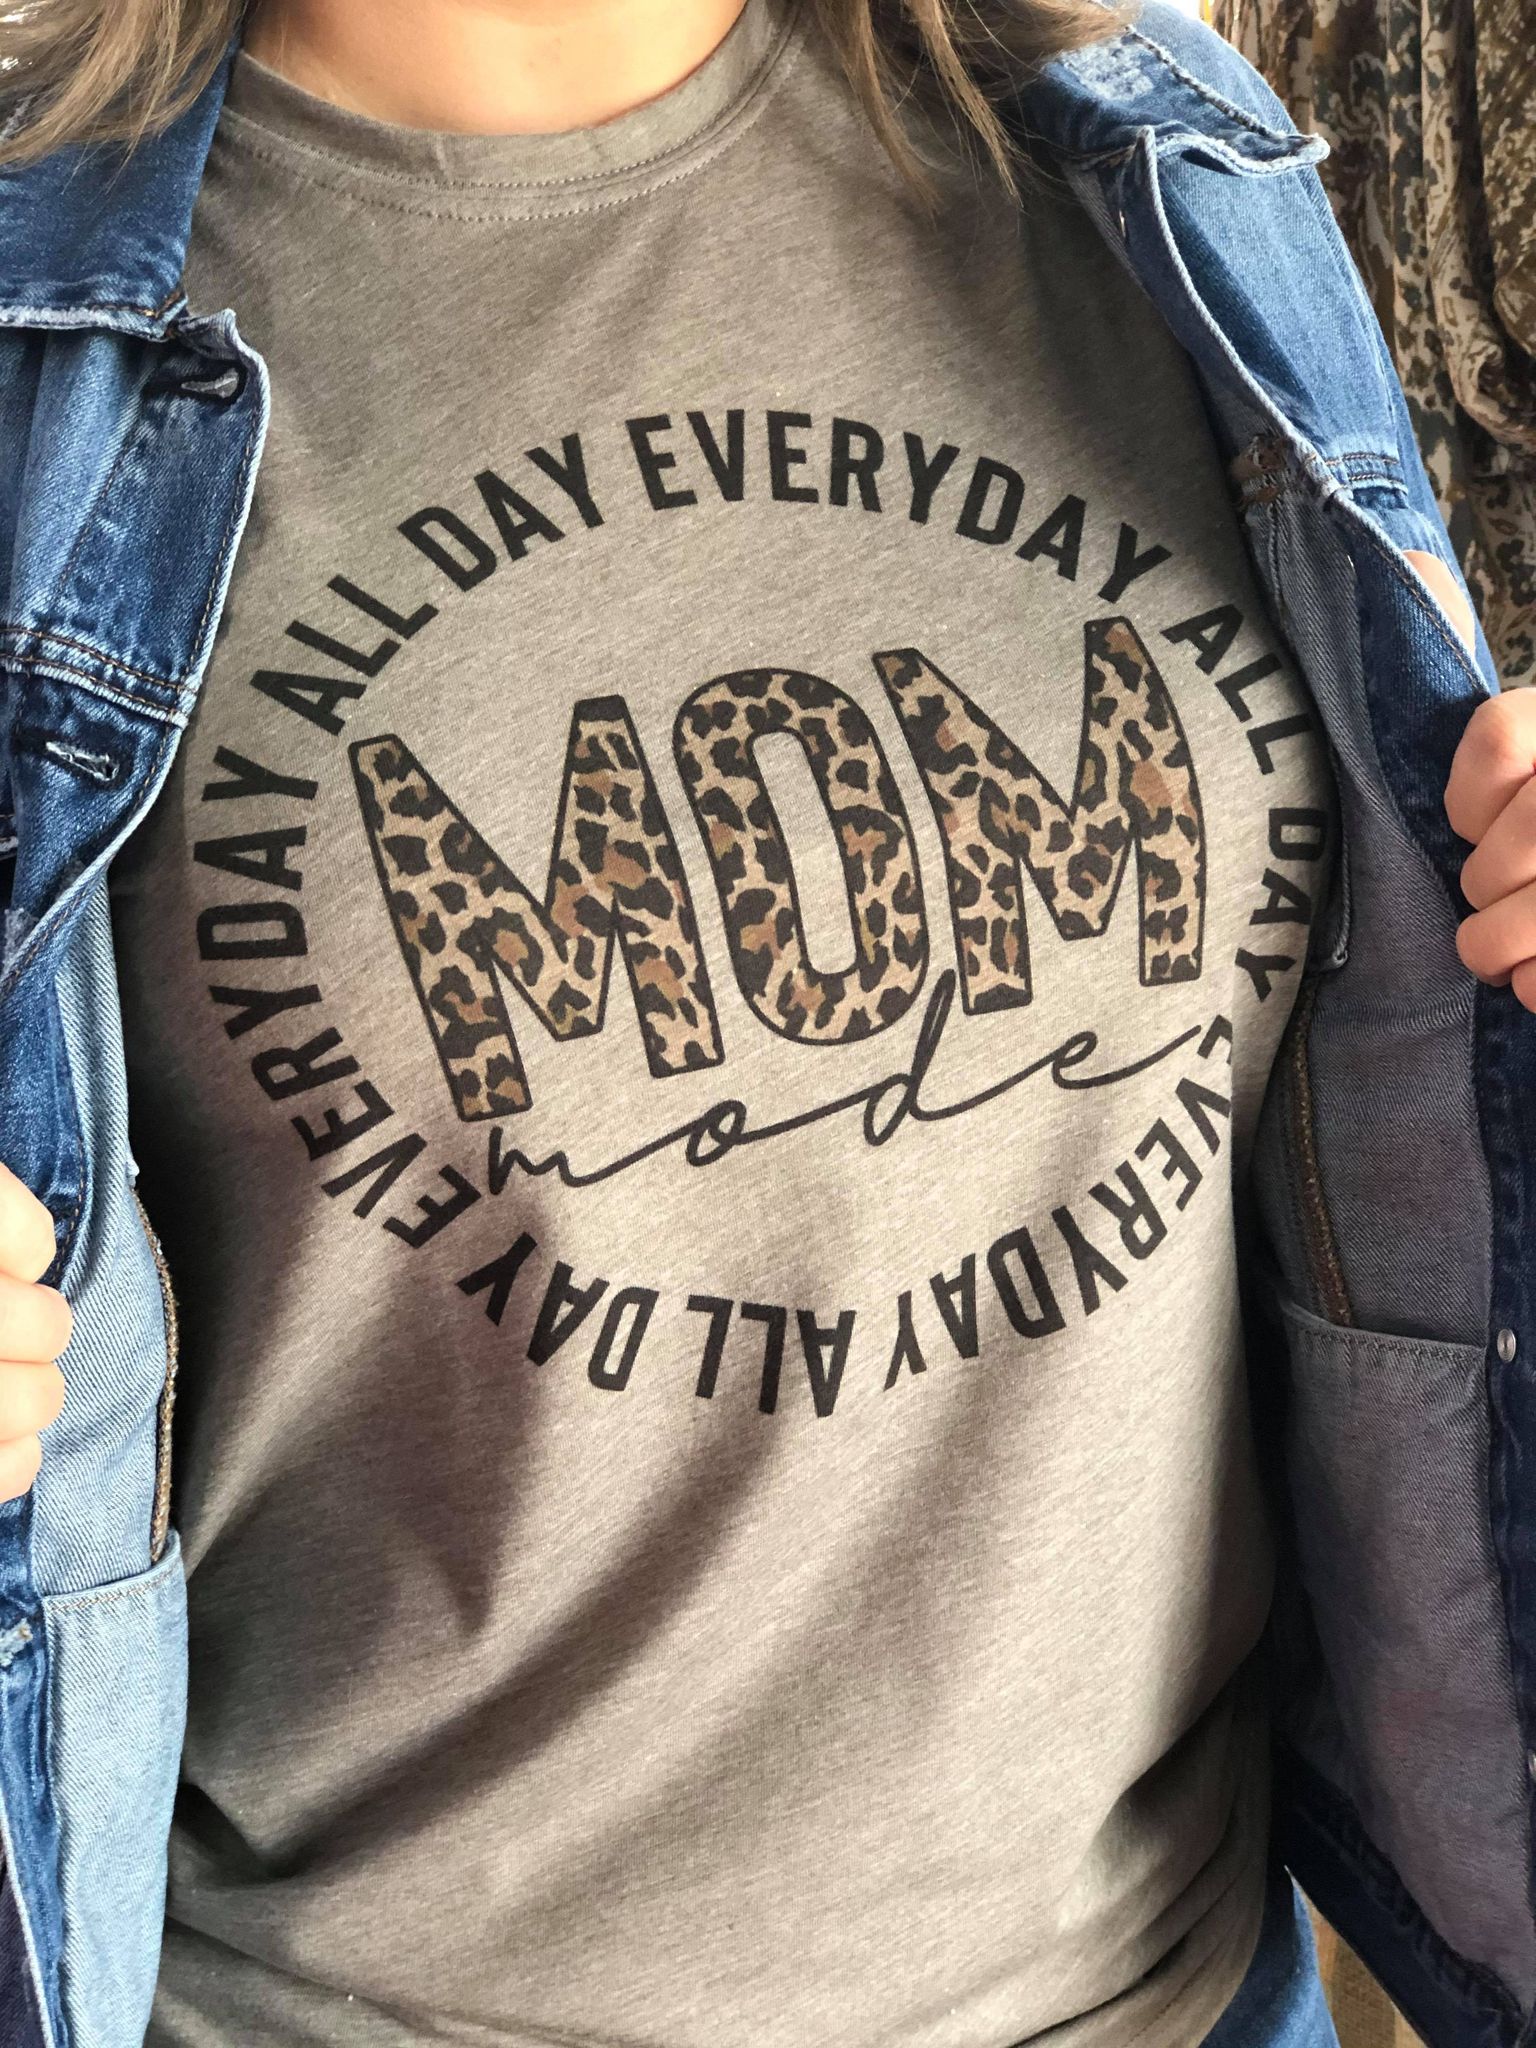 Mom Mode Tee-ask apparel wholesale